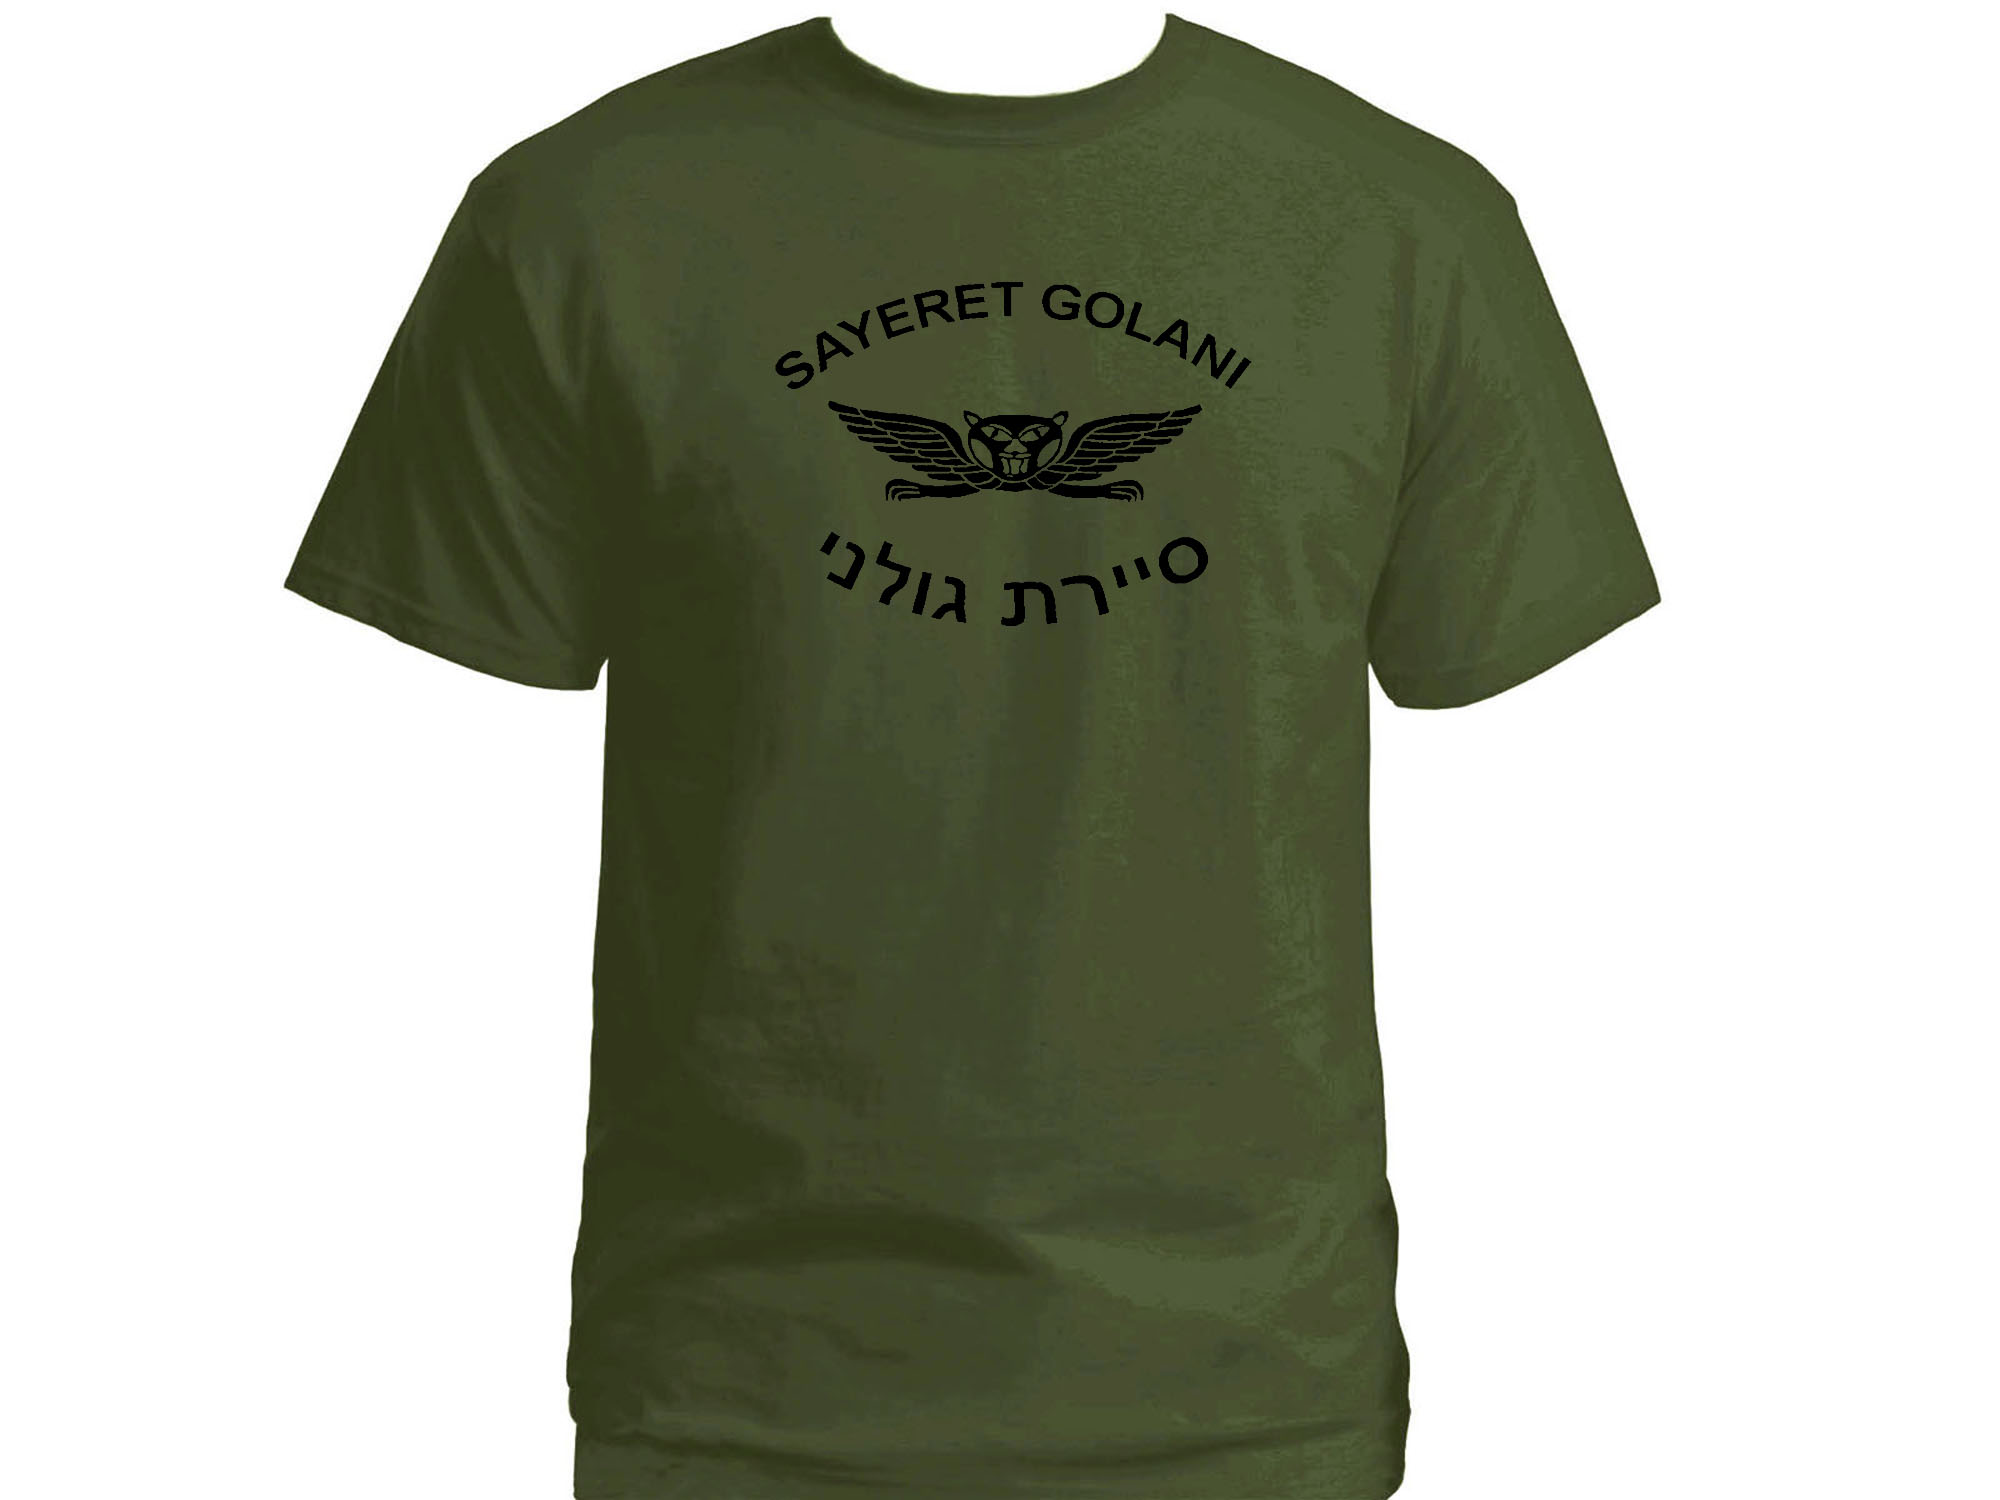 Sayeret Golani IDF Israel special forces army green T-Shirt